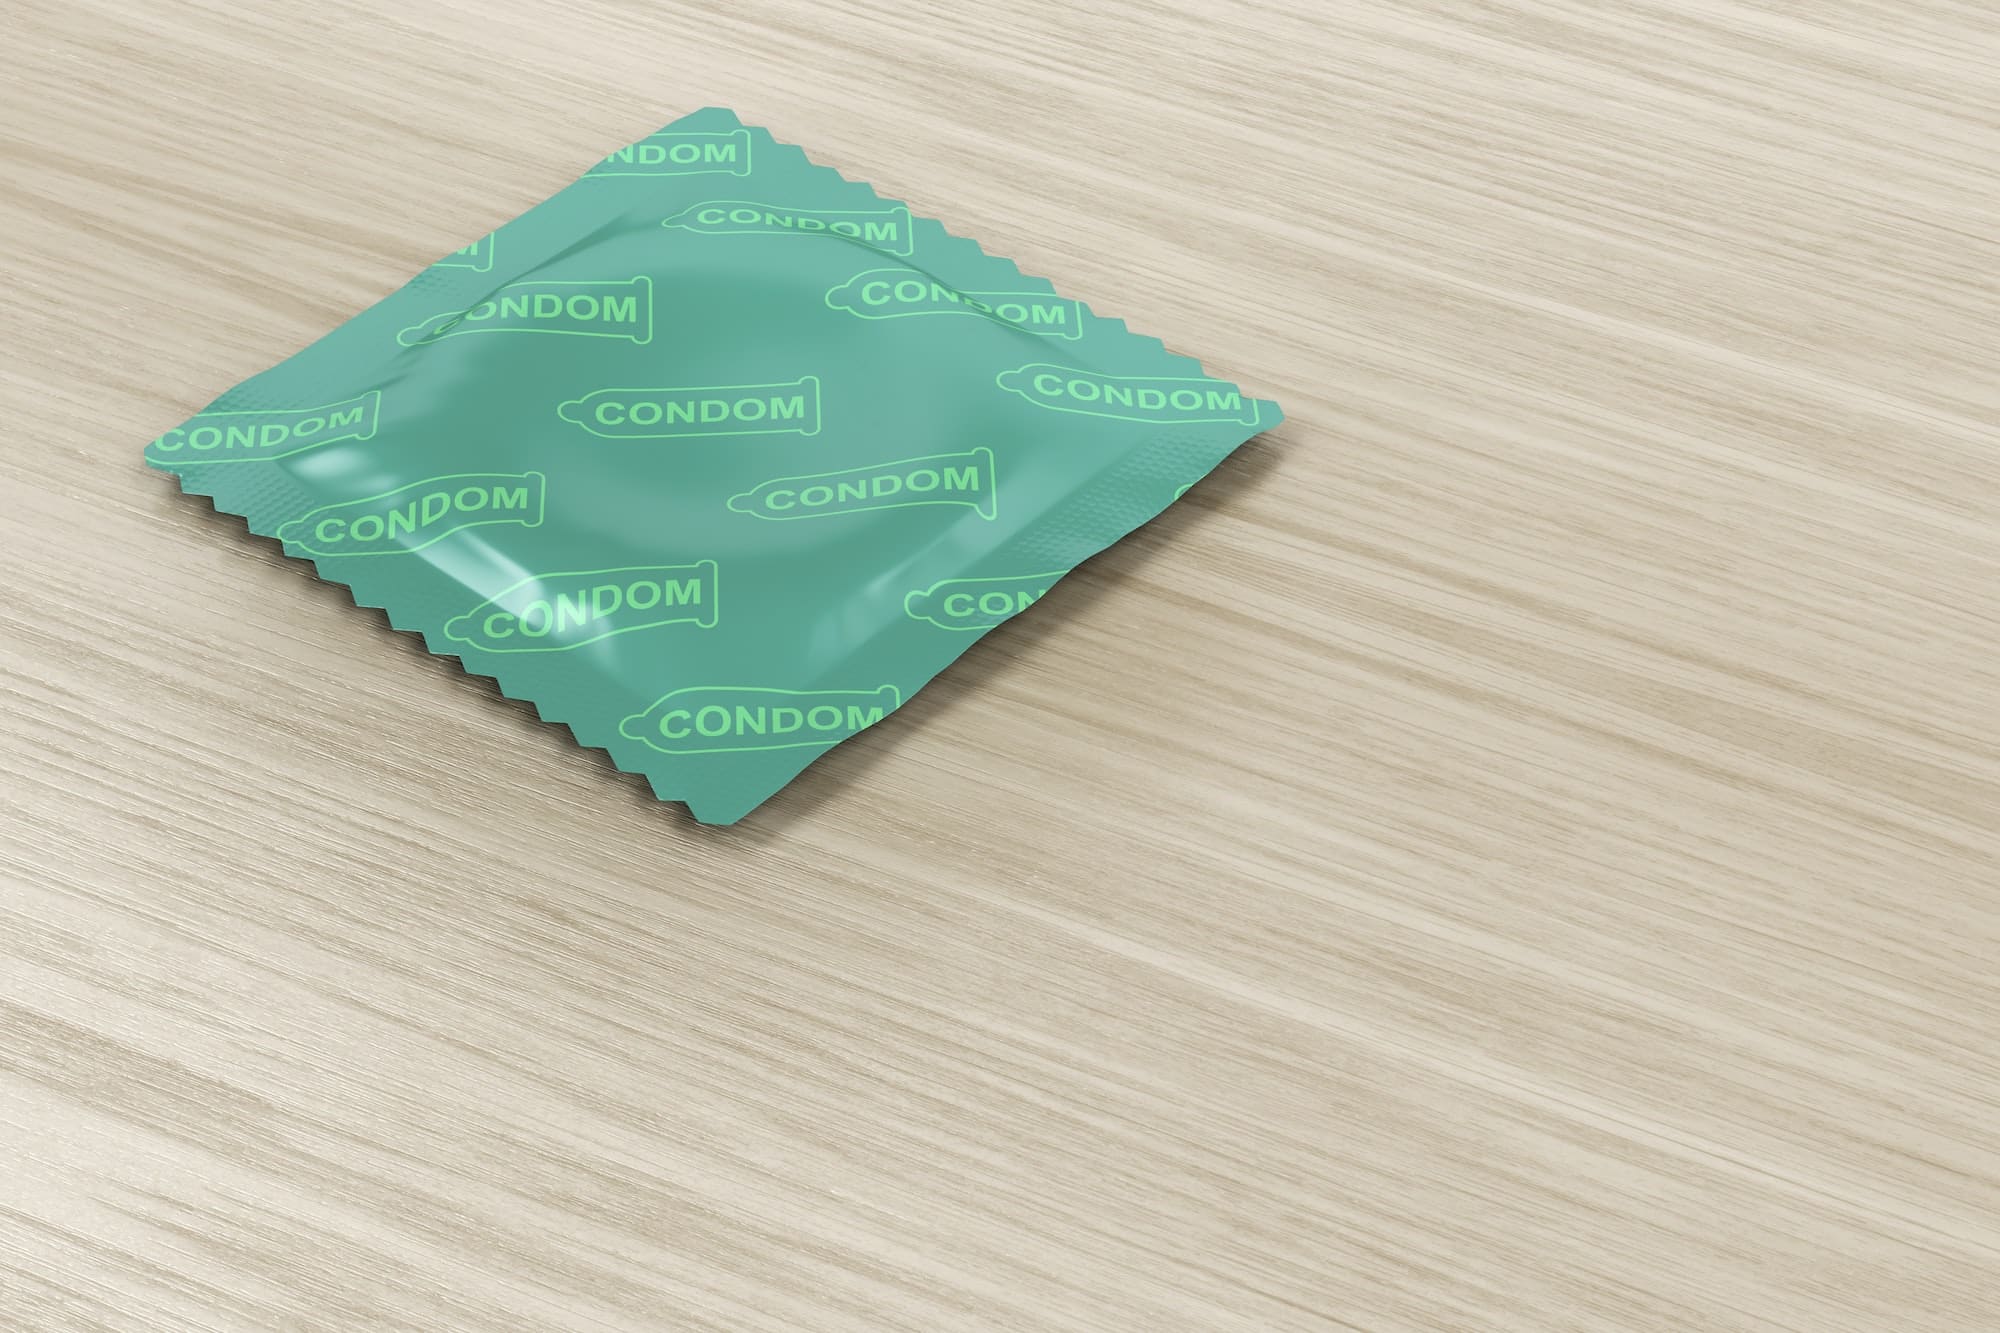 Condom on wood background